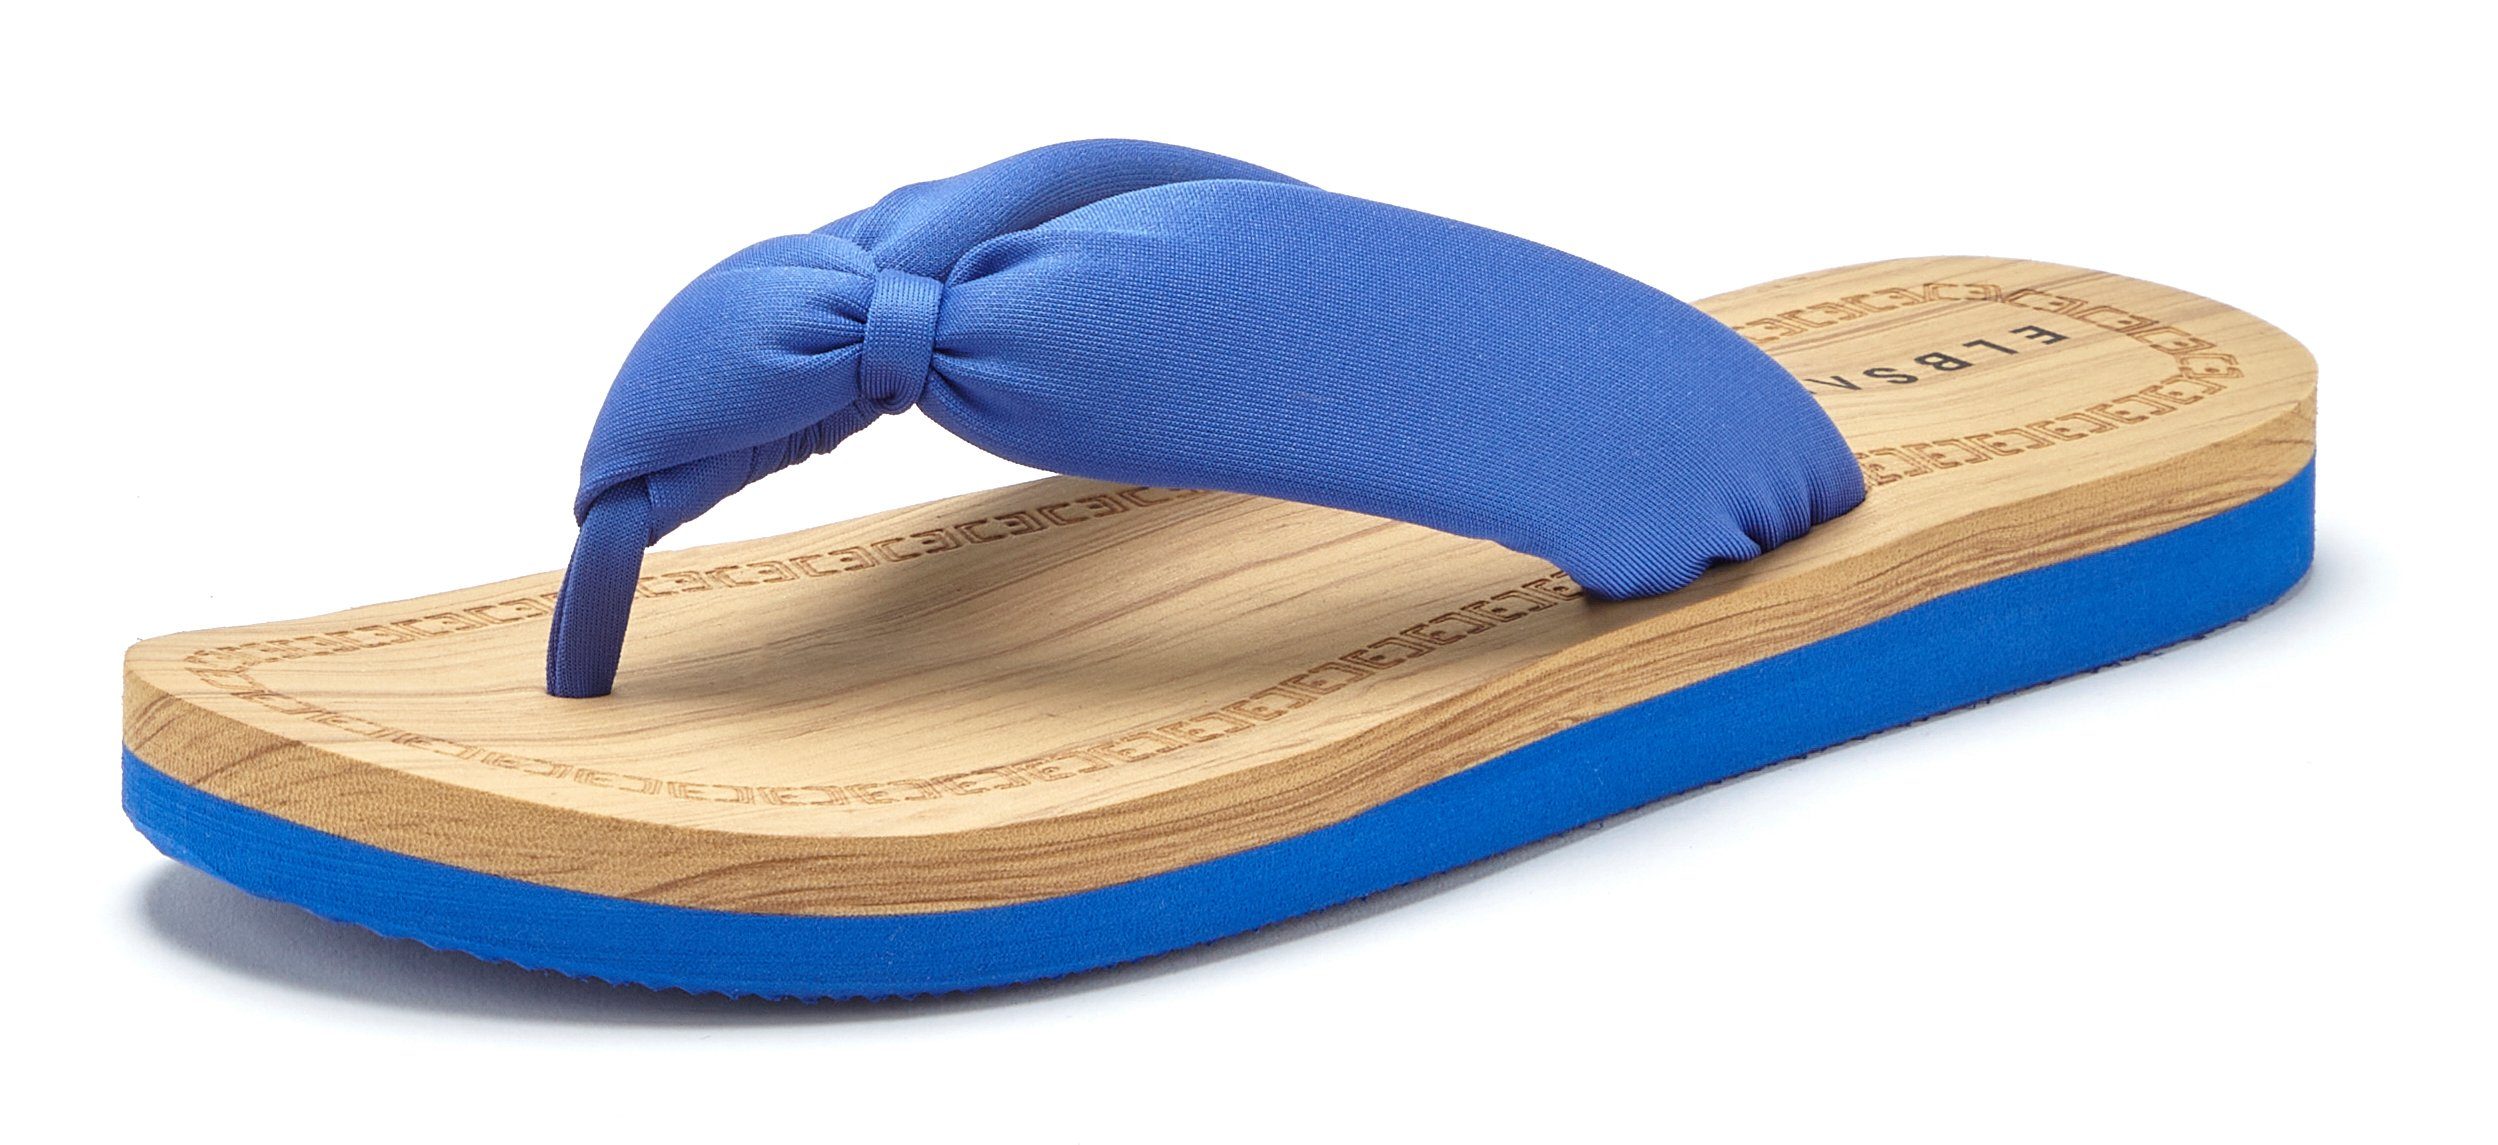 Pantolette, Badezehentrenner Badeschuh ultraleicht VEGAN Elbsand Sandale, blau